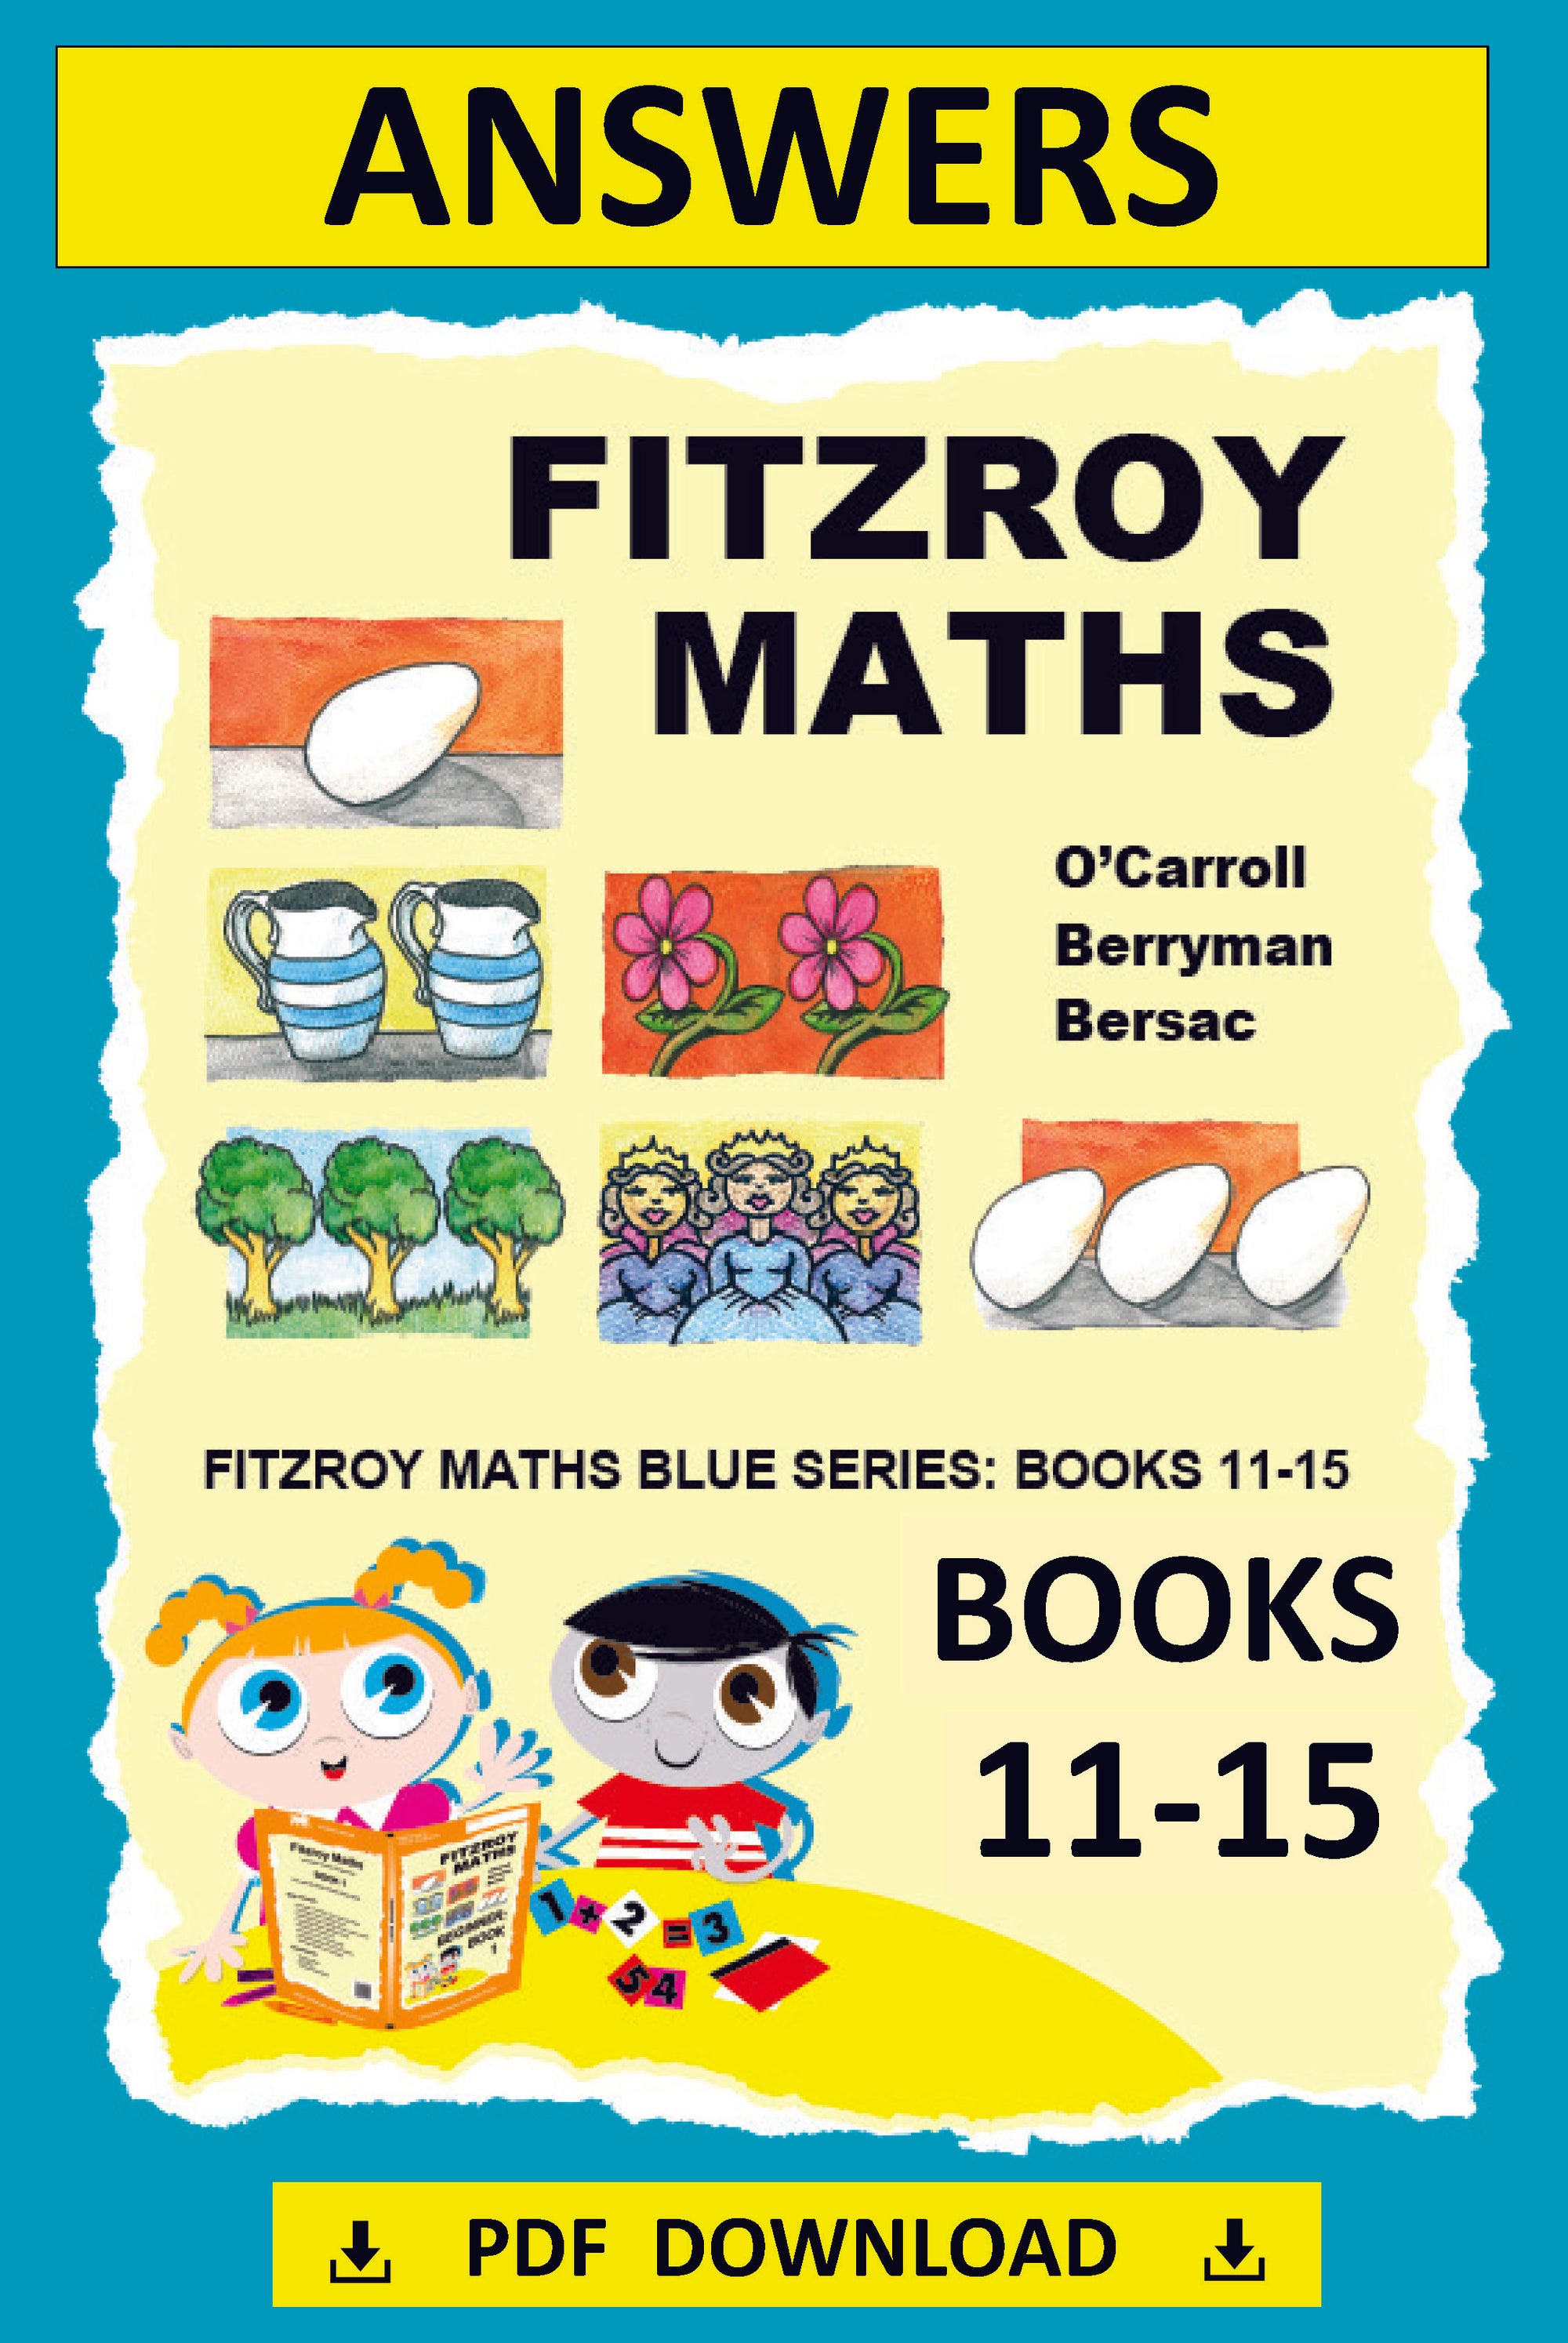 Fitzroy Maths Answers 11-15